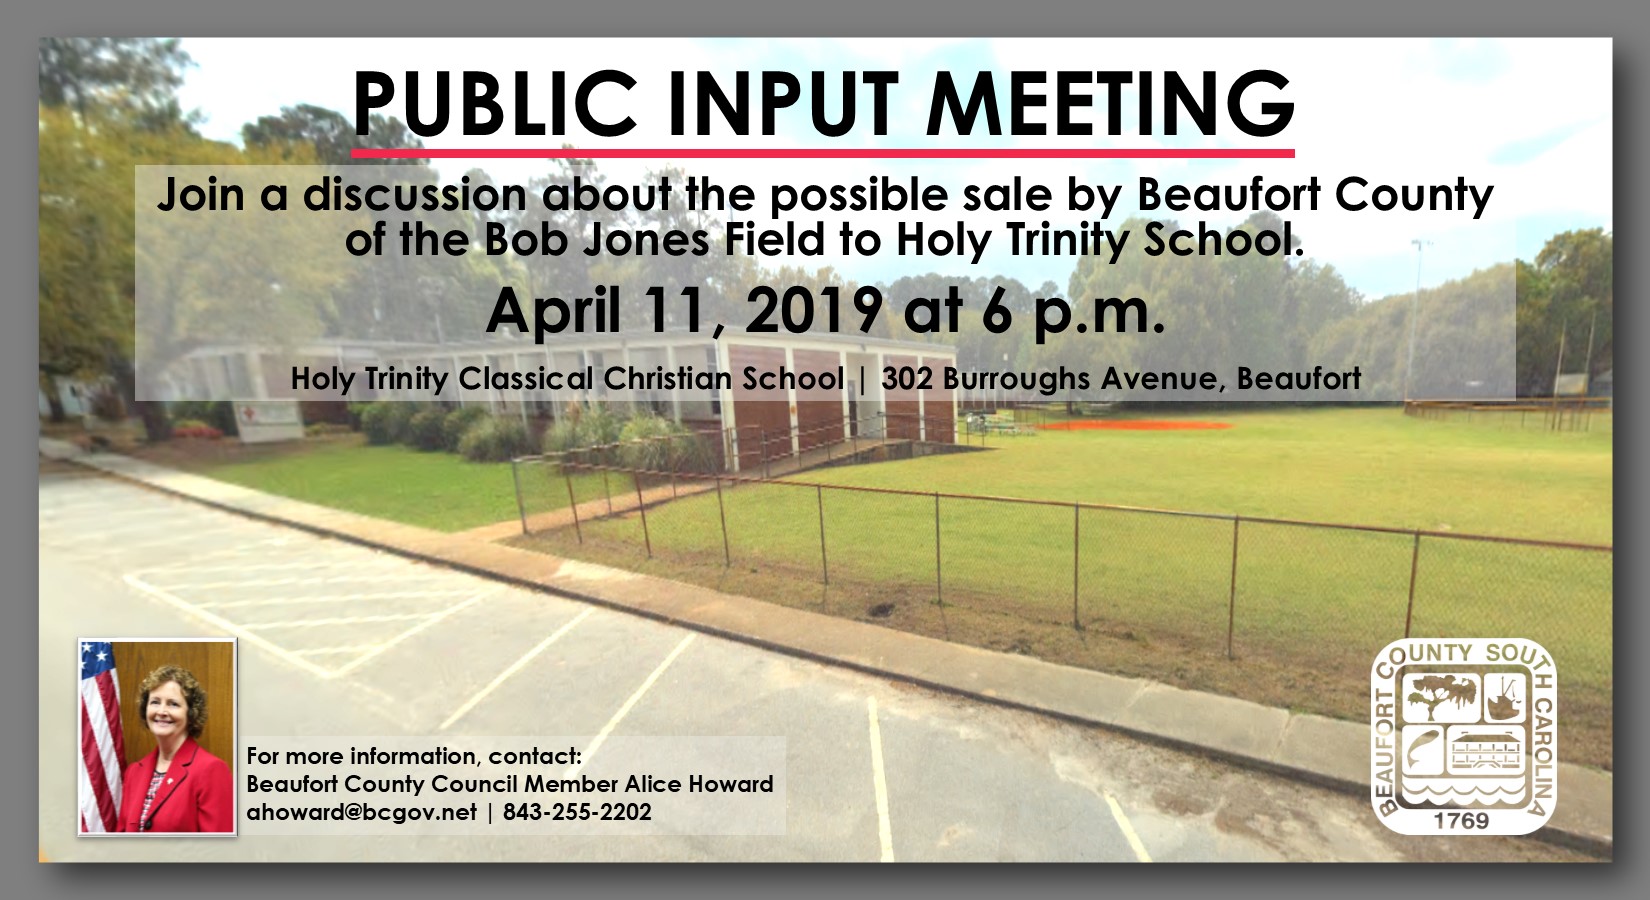 Beaufort County Holding Public Input Meeting April 11 on Possible Sale of Bob Jones Field